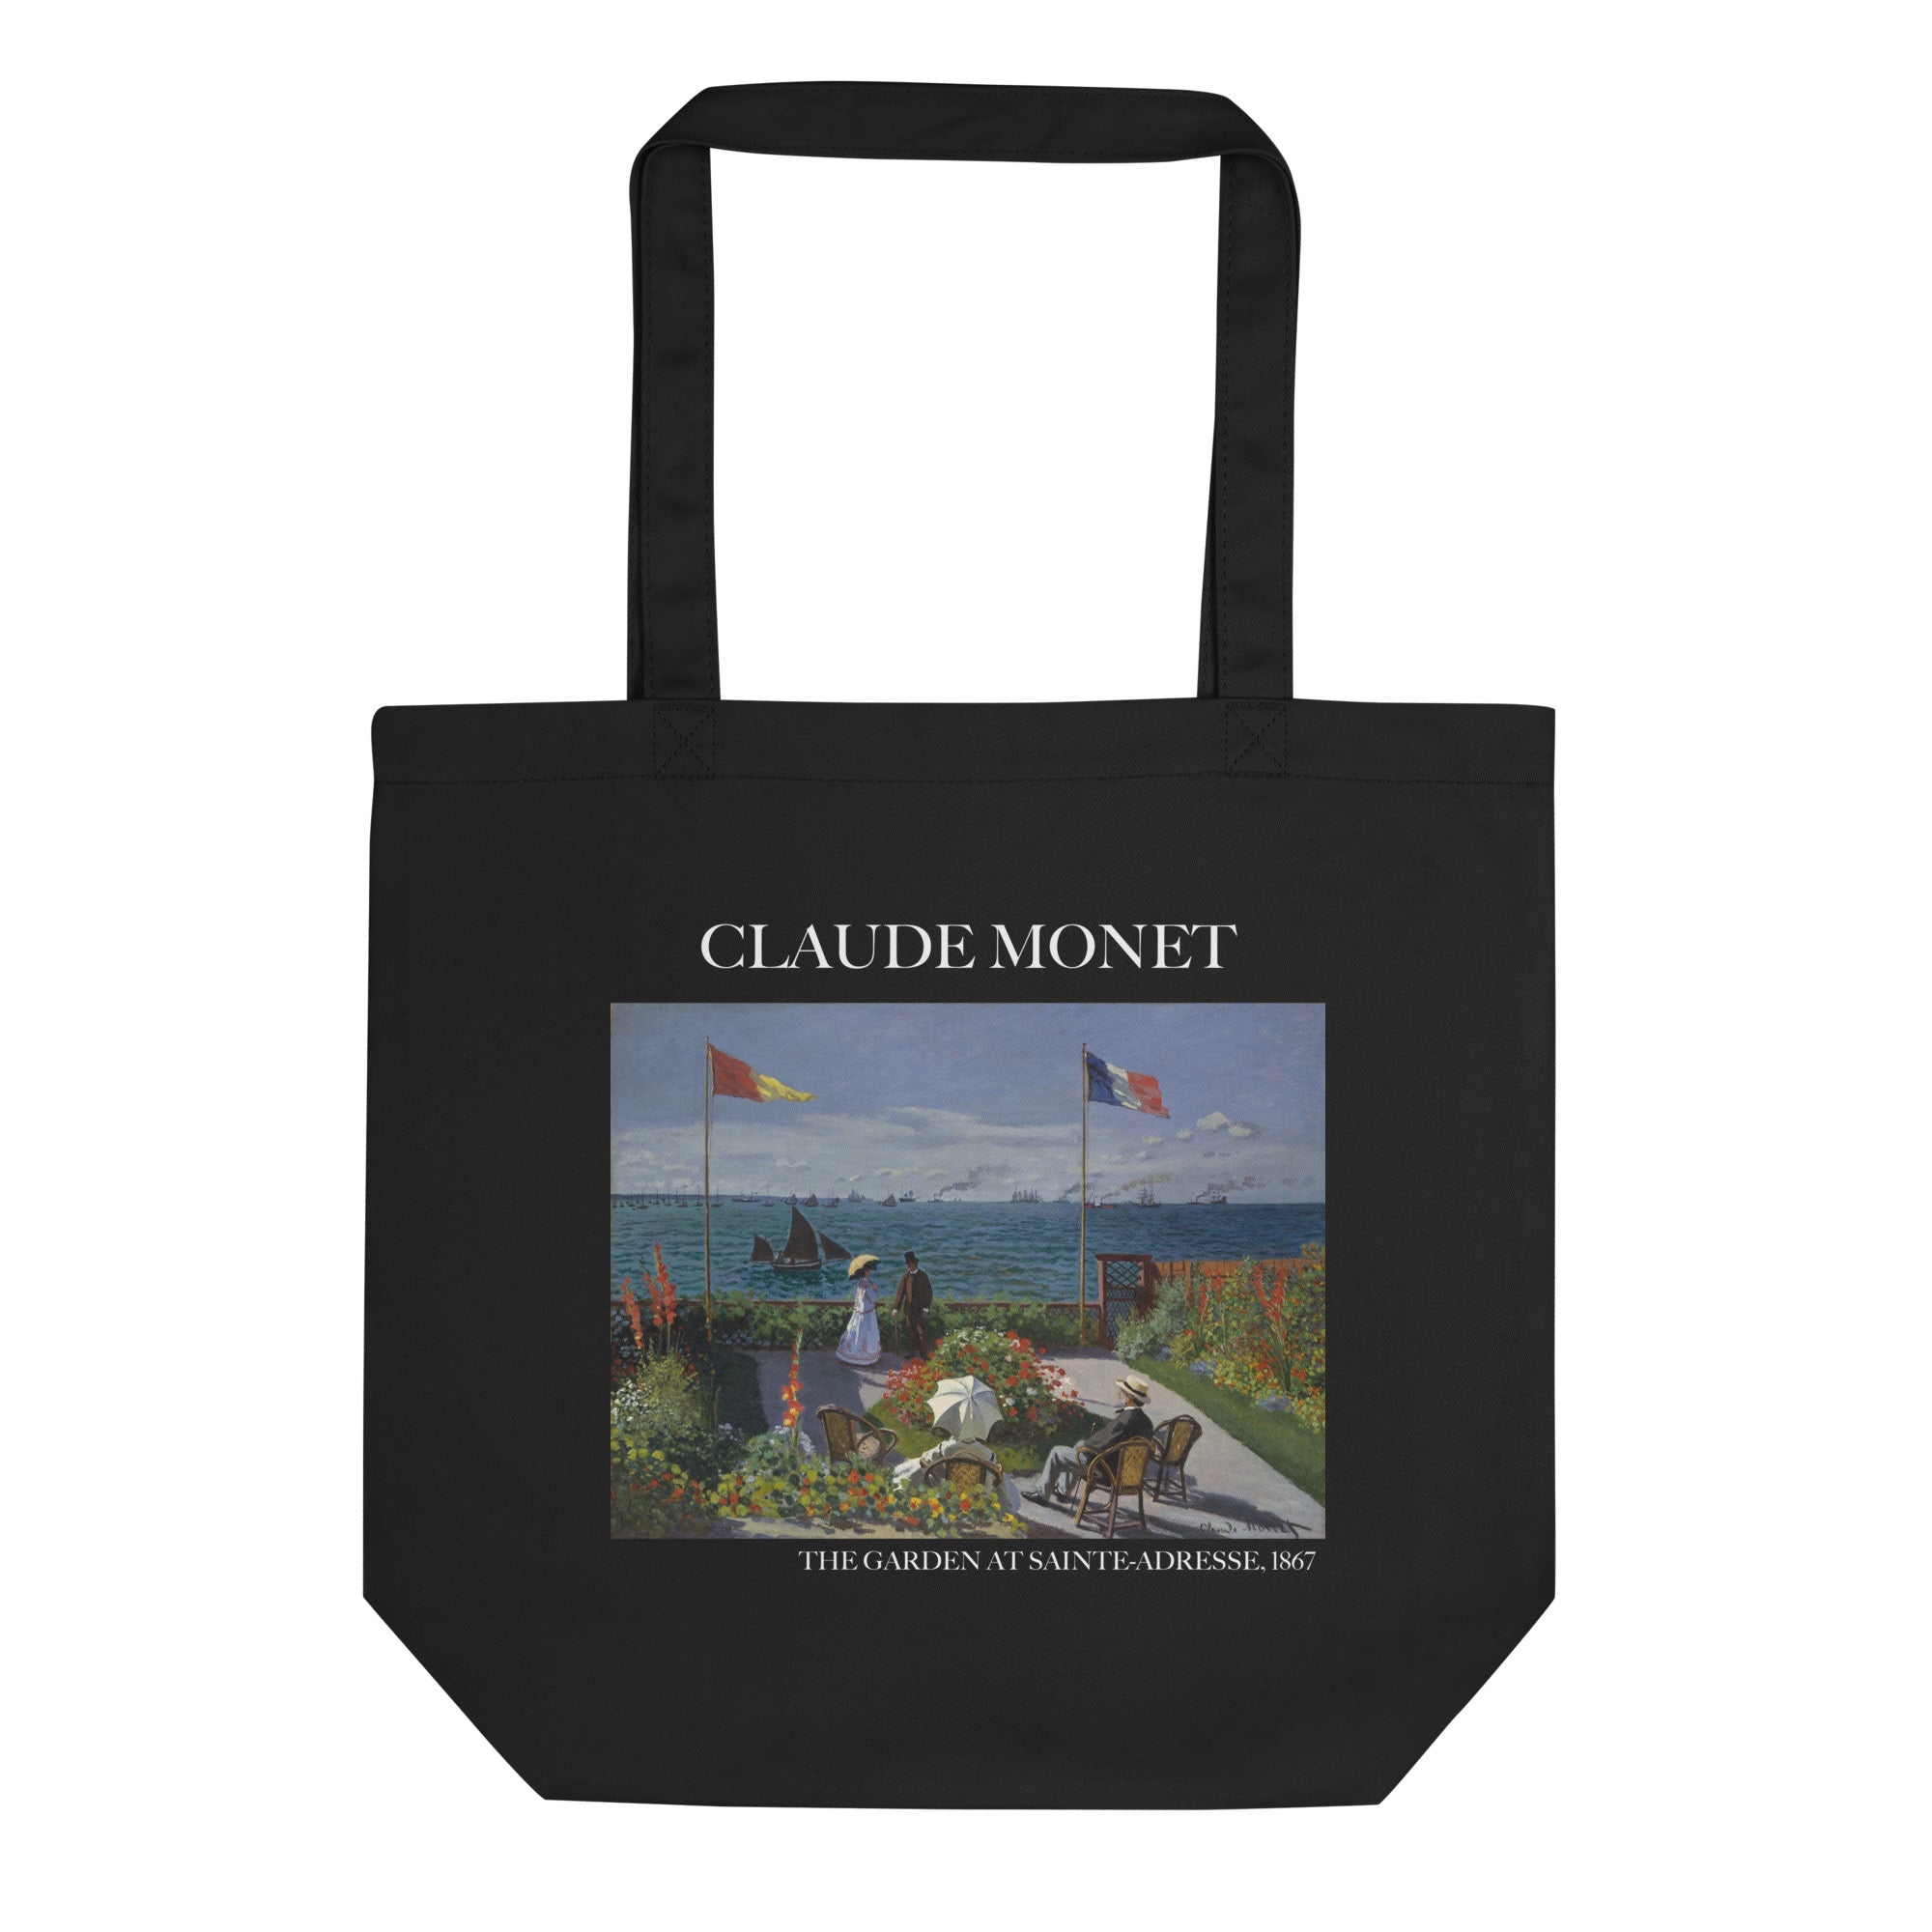 Claude Monet 'The Garden at Sainte-Adresse' Famous Painting Totebag | Eco Friendly Art Tote Bag